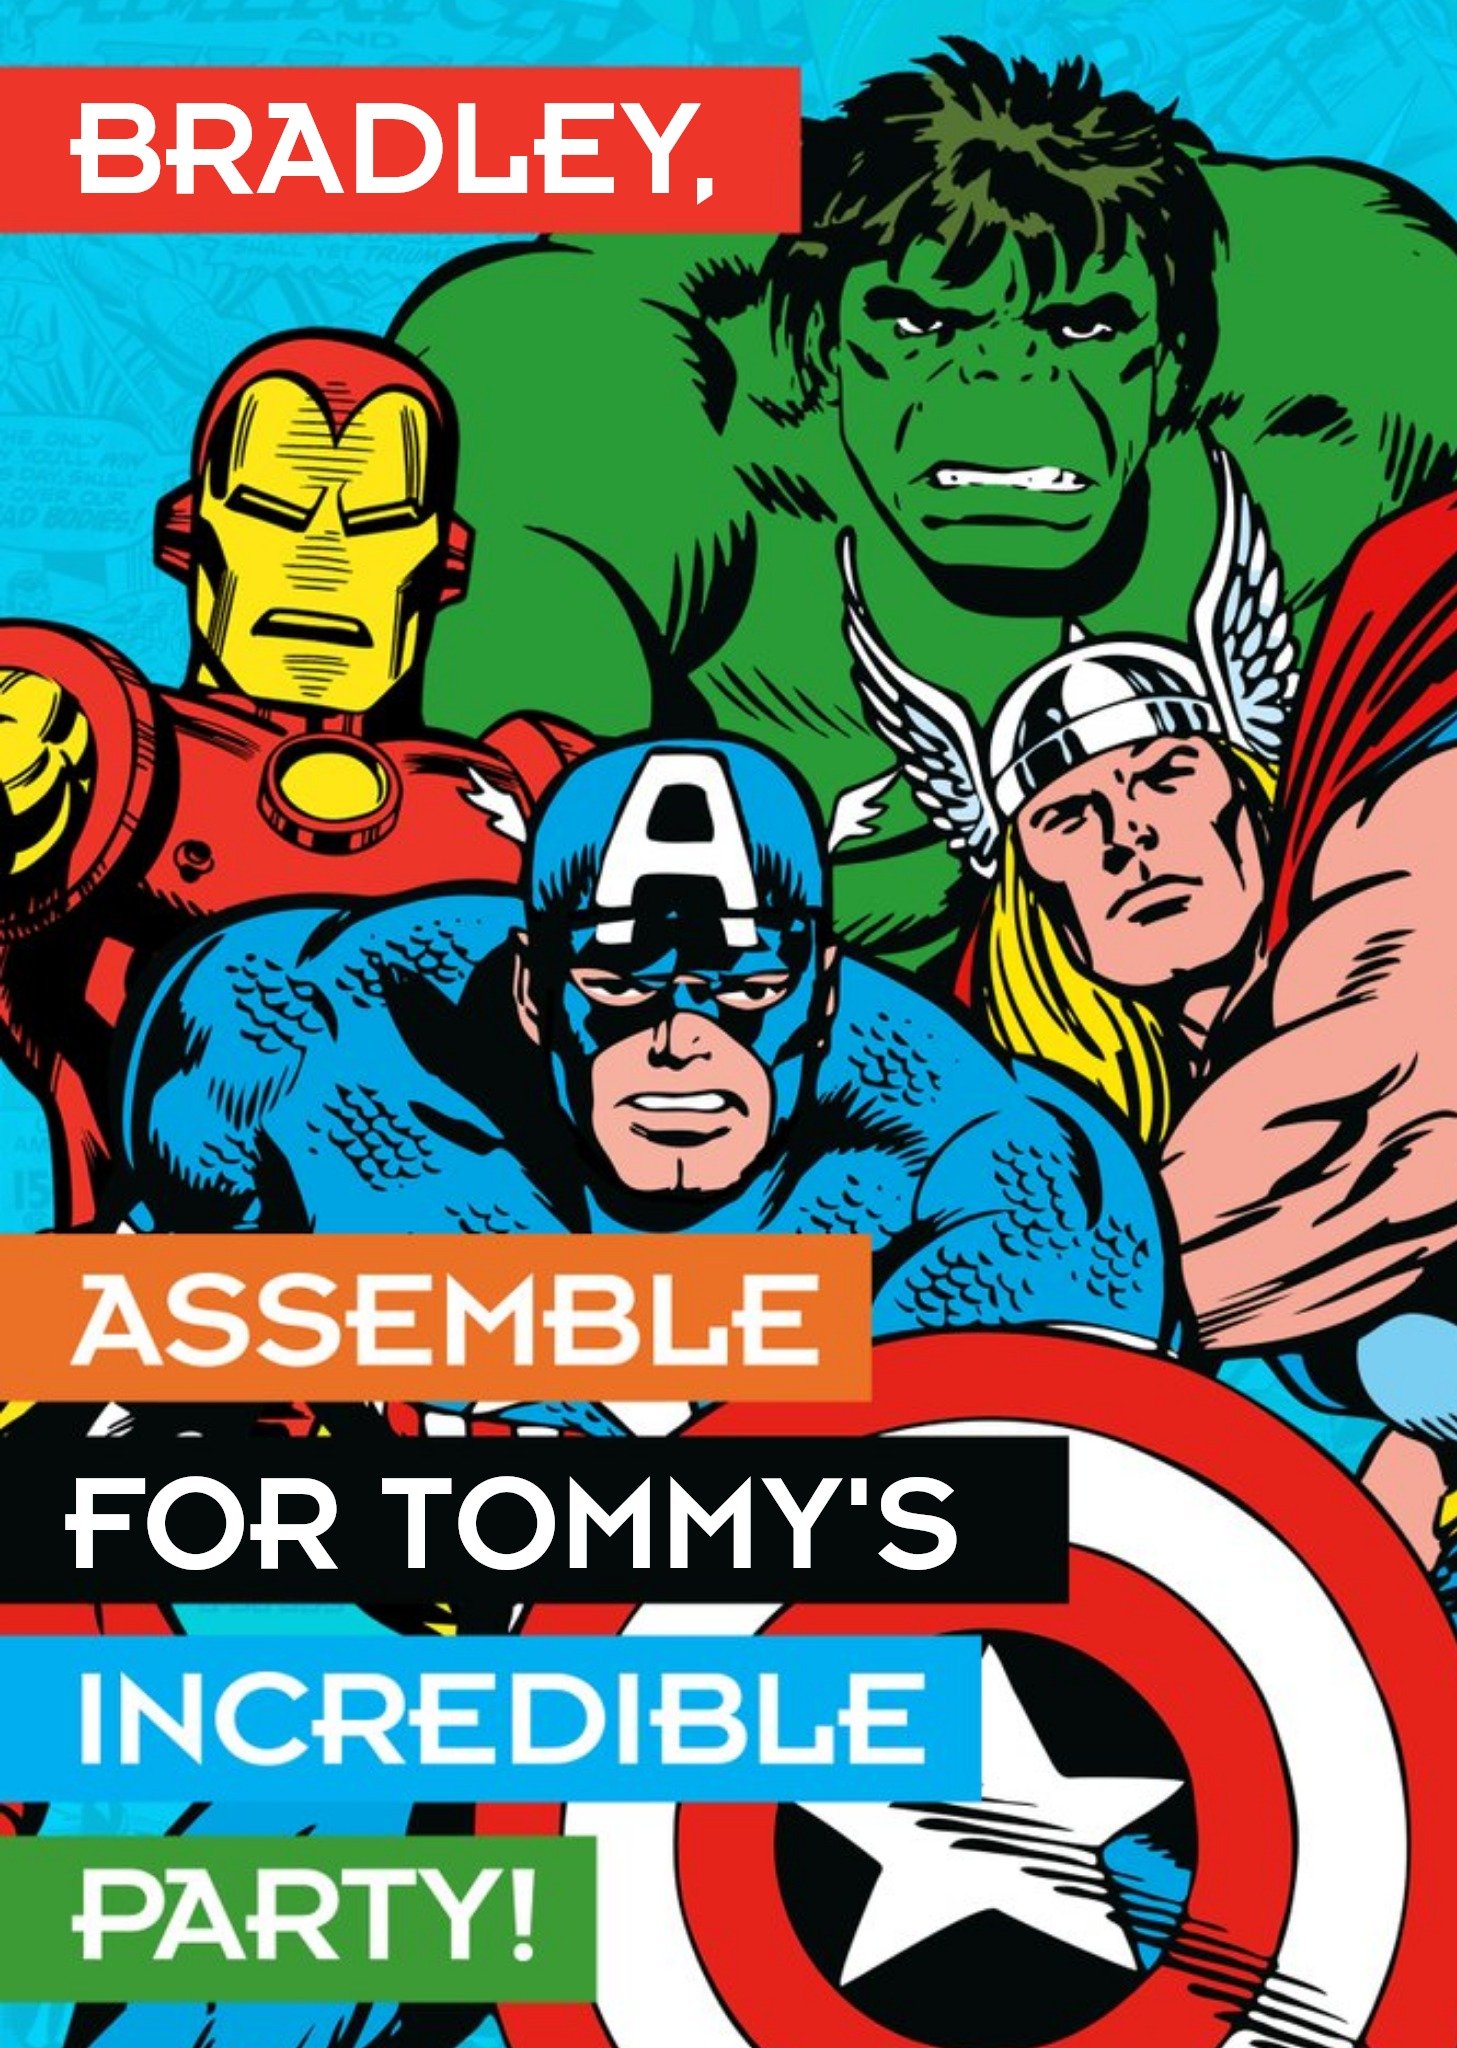 Disney Marvel The Avengers Birthday Party Invitation, Standard Card